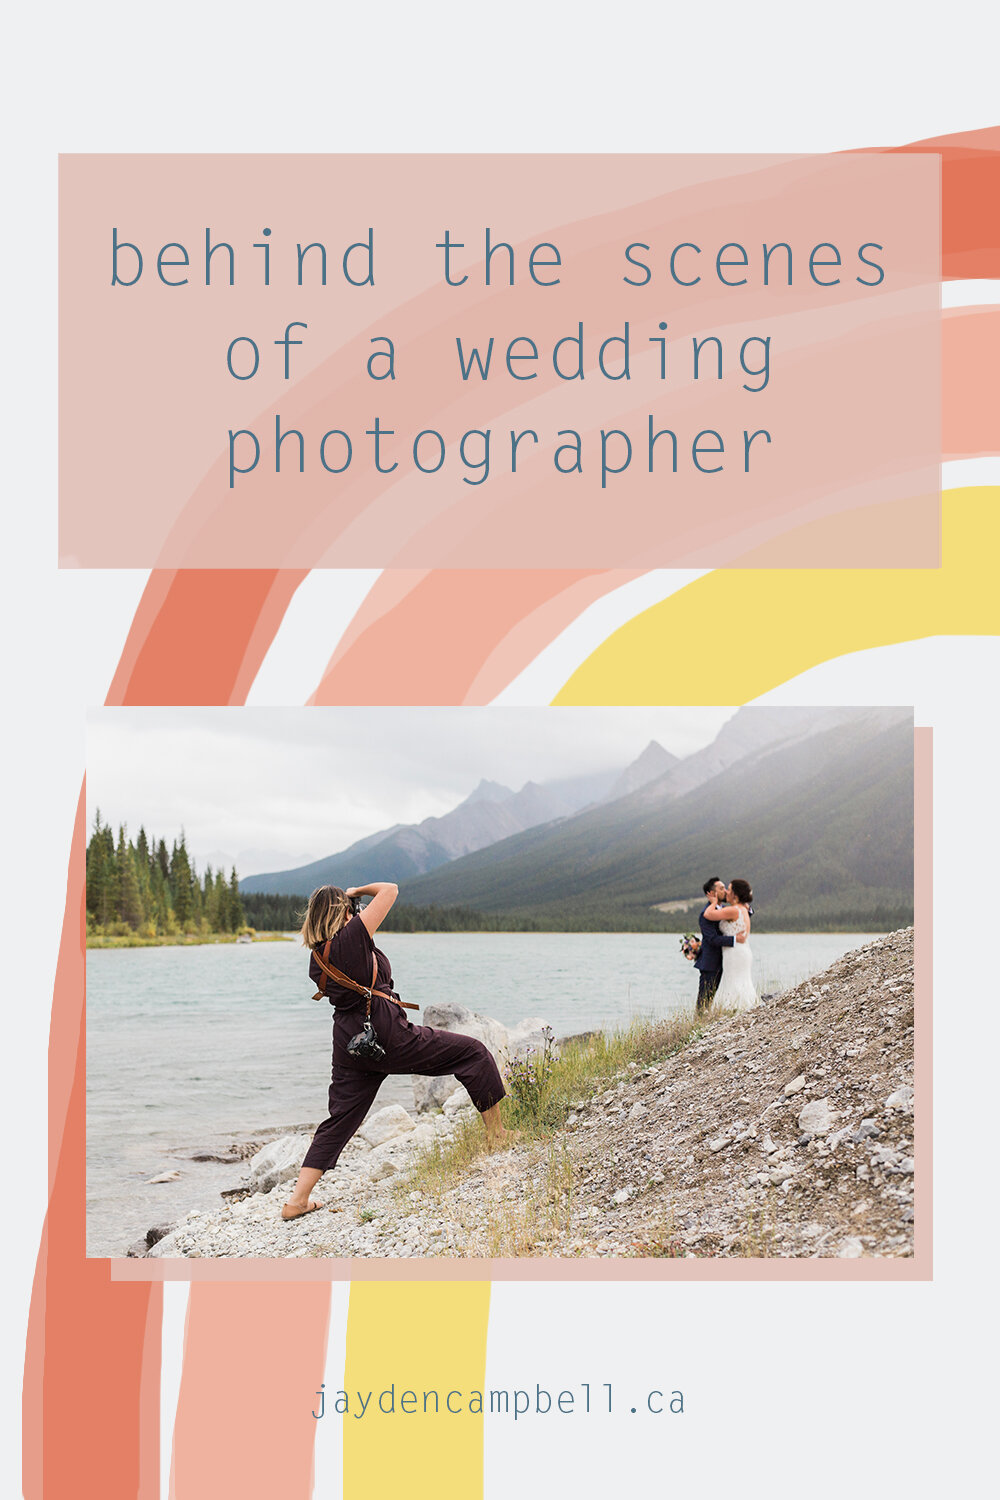 jayden campbell behind the scenes of a wedding photographer.jpg